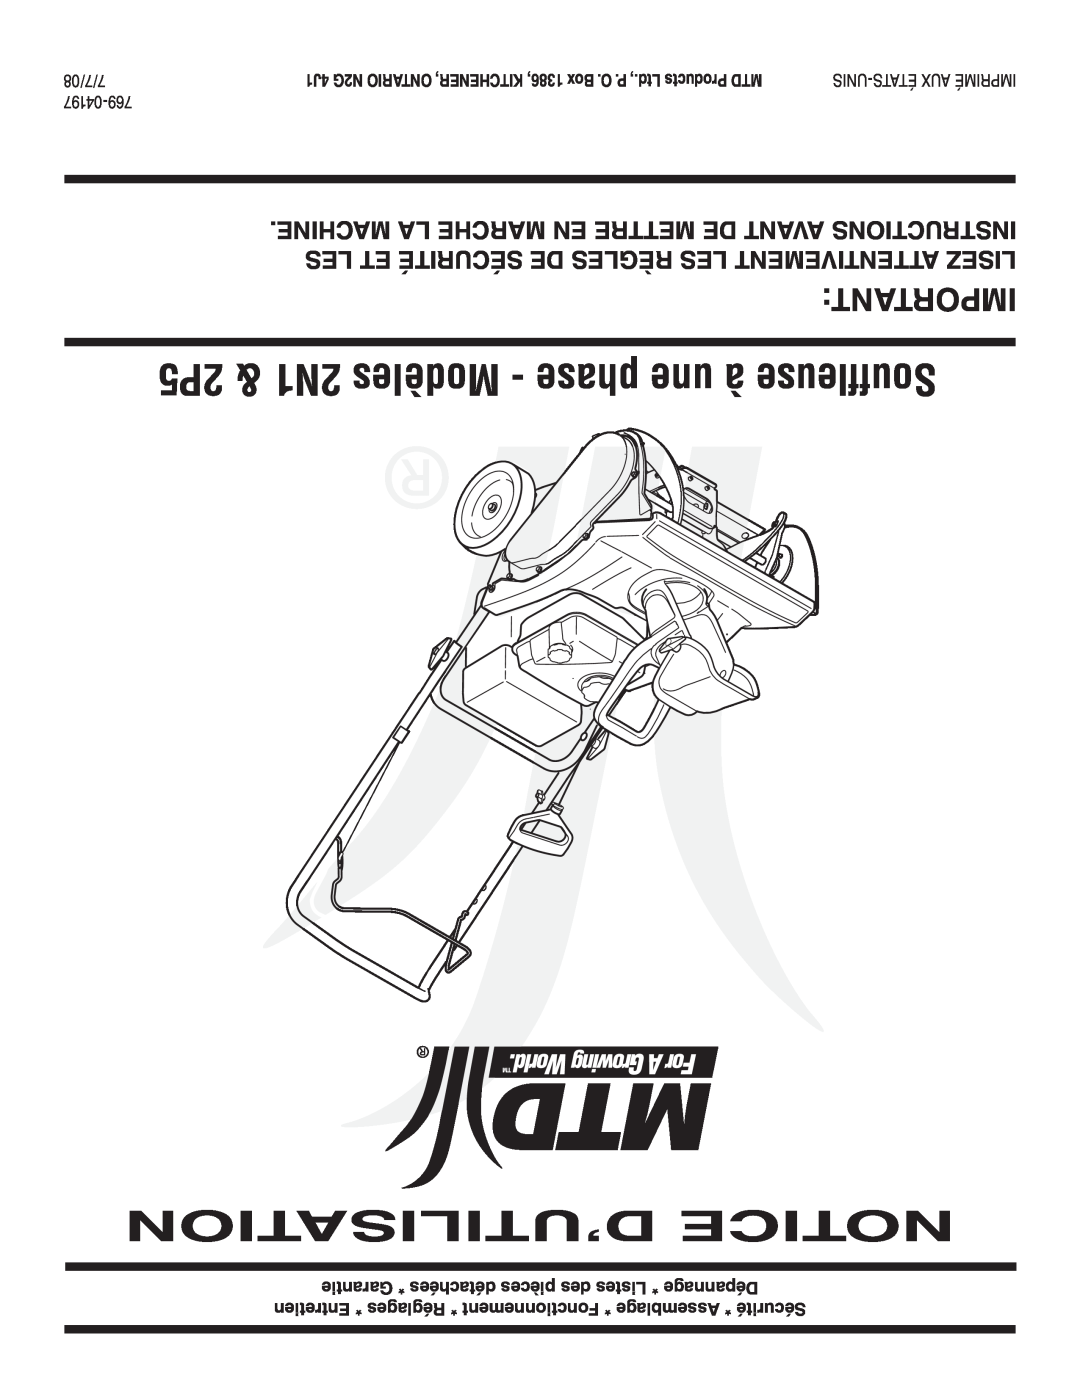 MTD 2N1 warranty D’Utilisation Notice, 7/7/08, 04197-769 